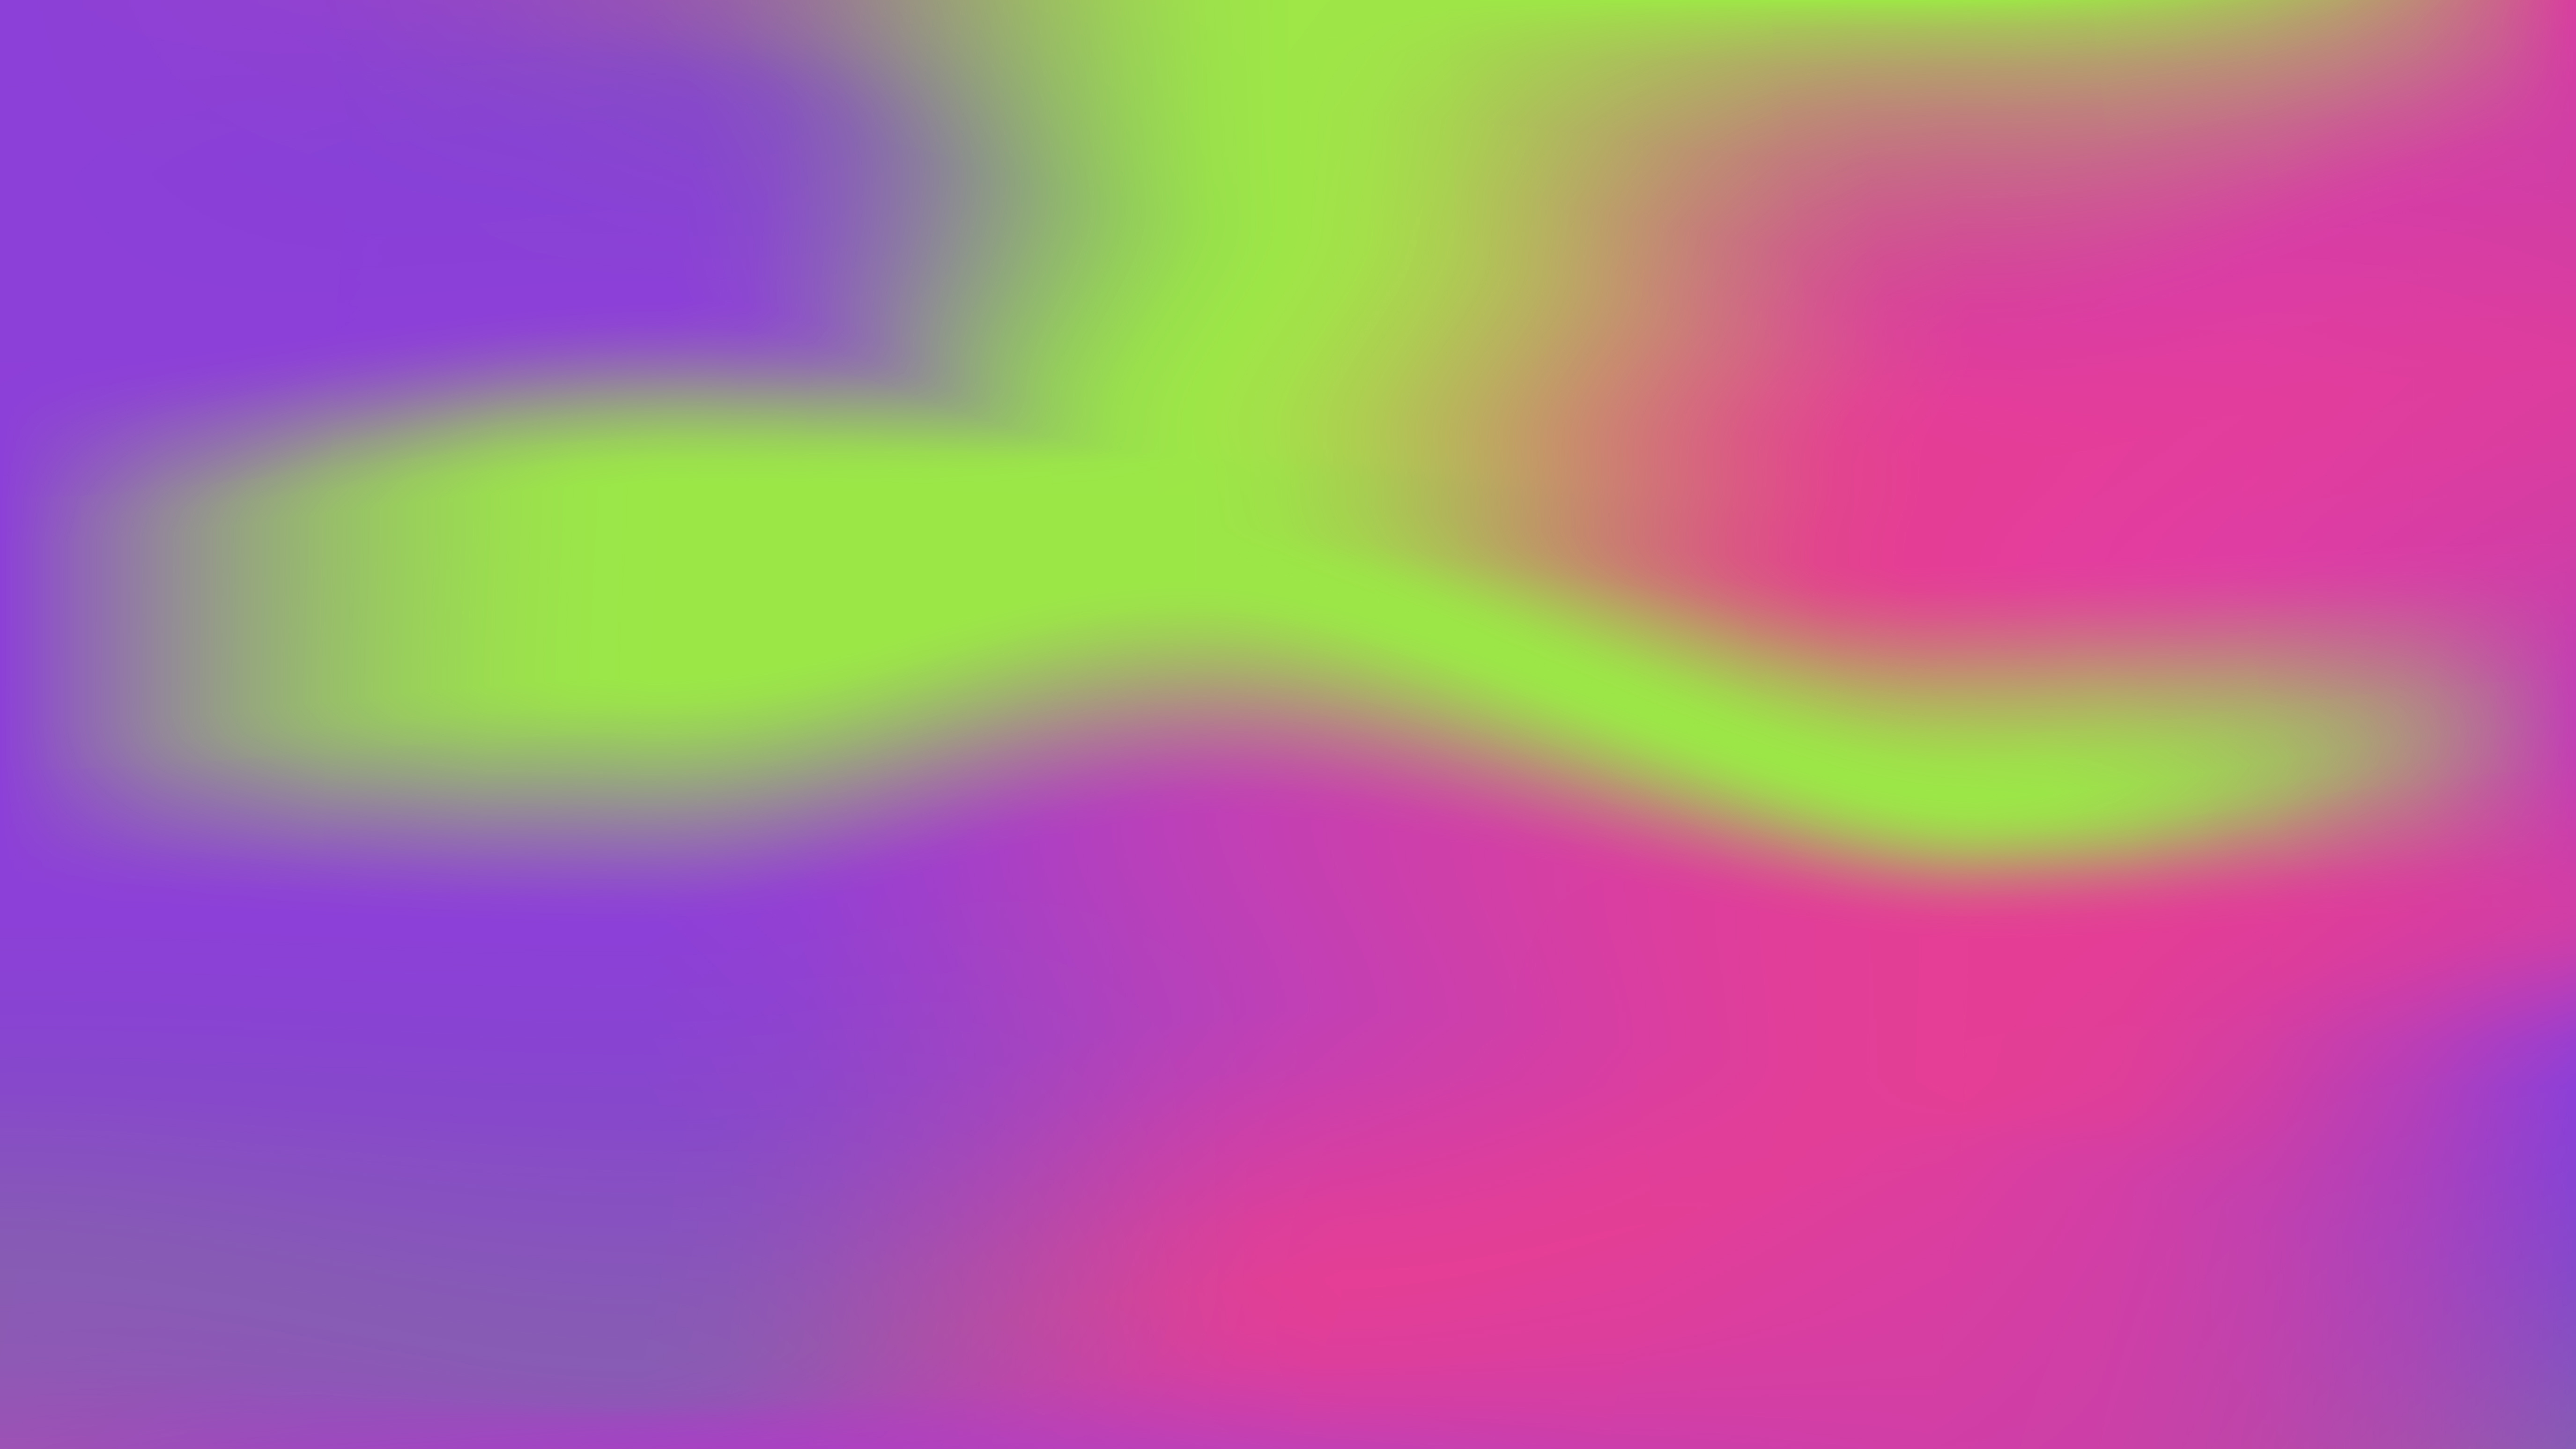 Vivid Colors Abstract Background Download Free Vectors Clipart Graphics Vector Art